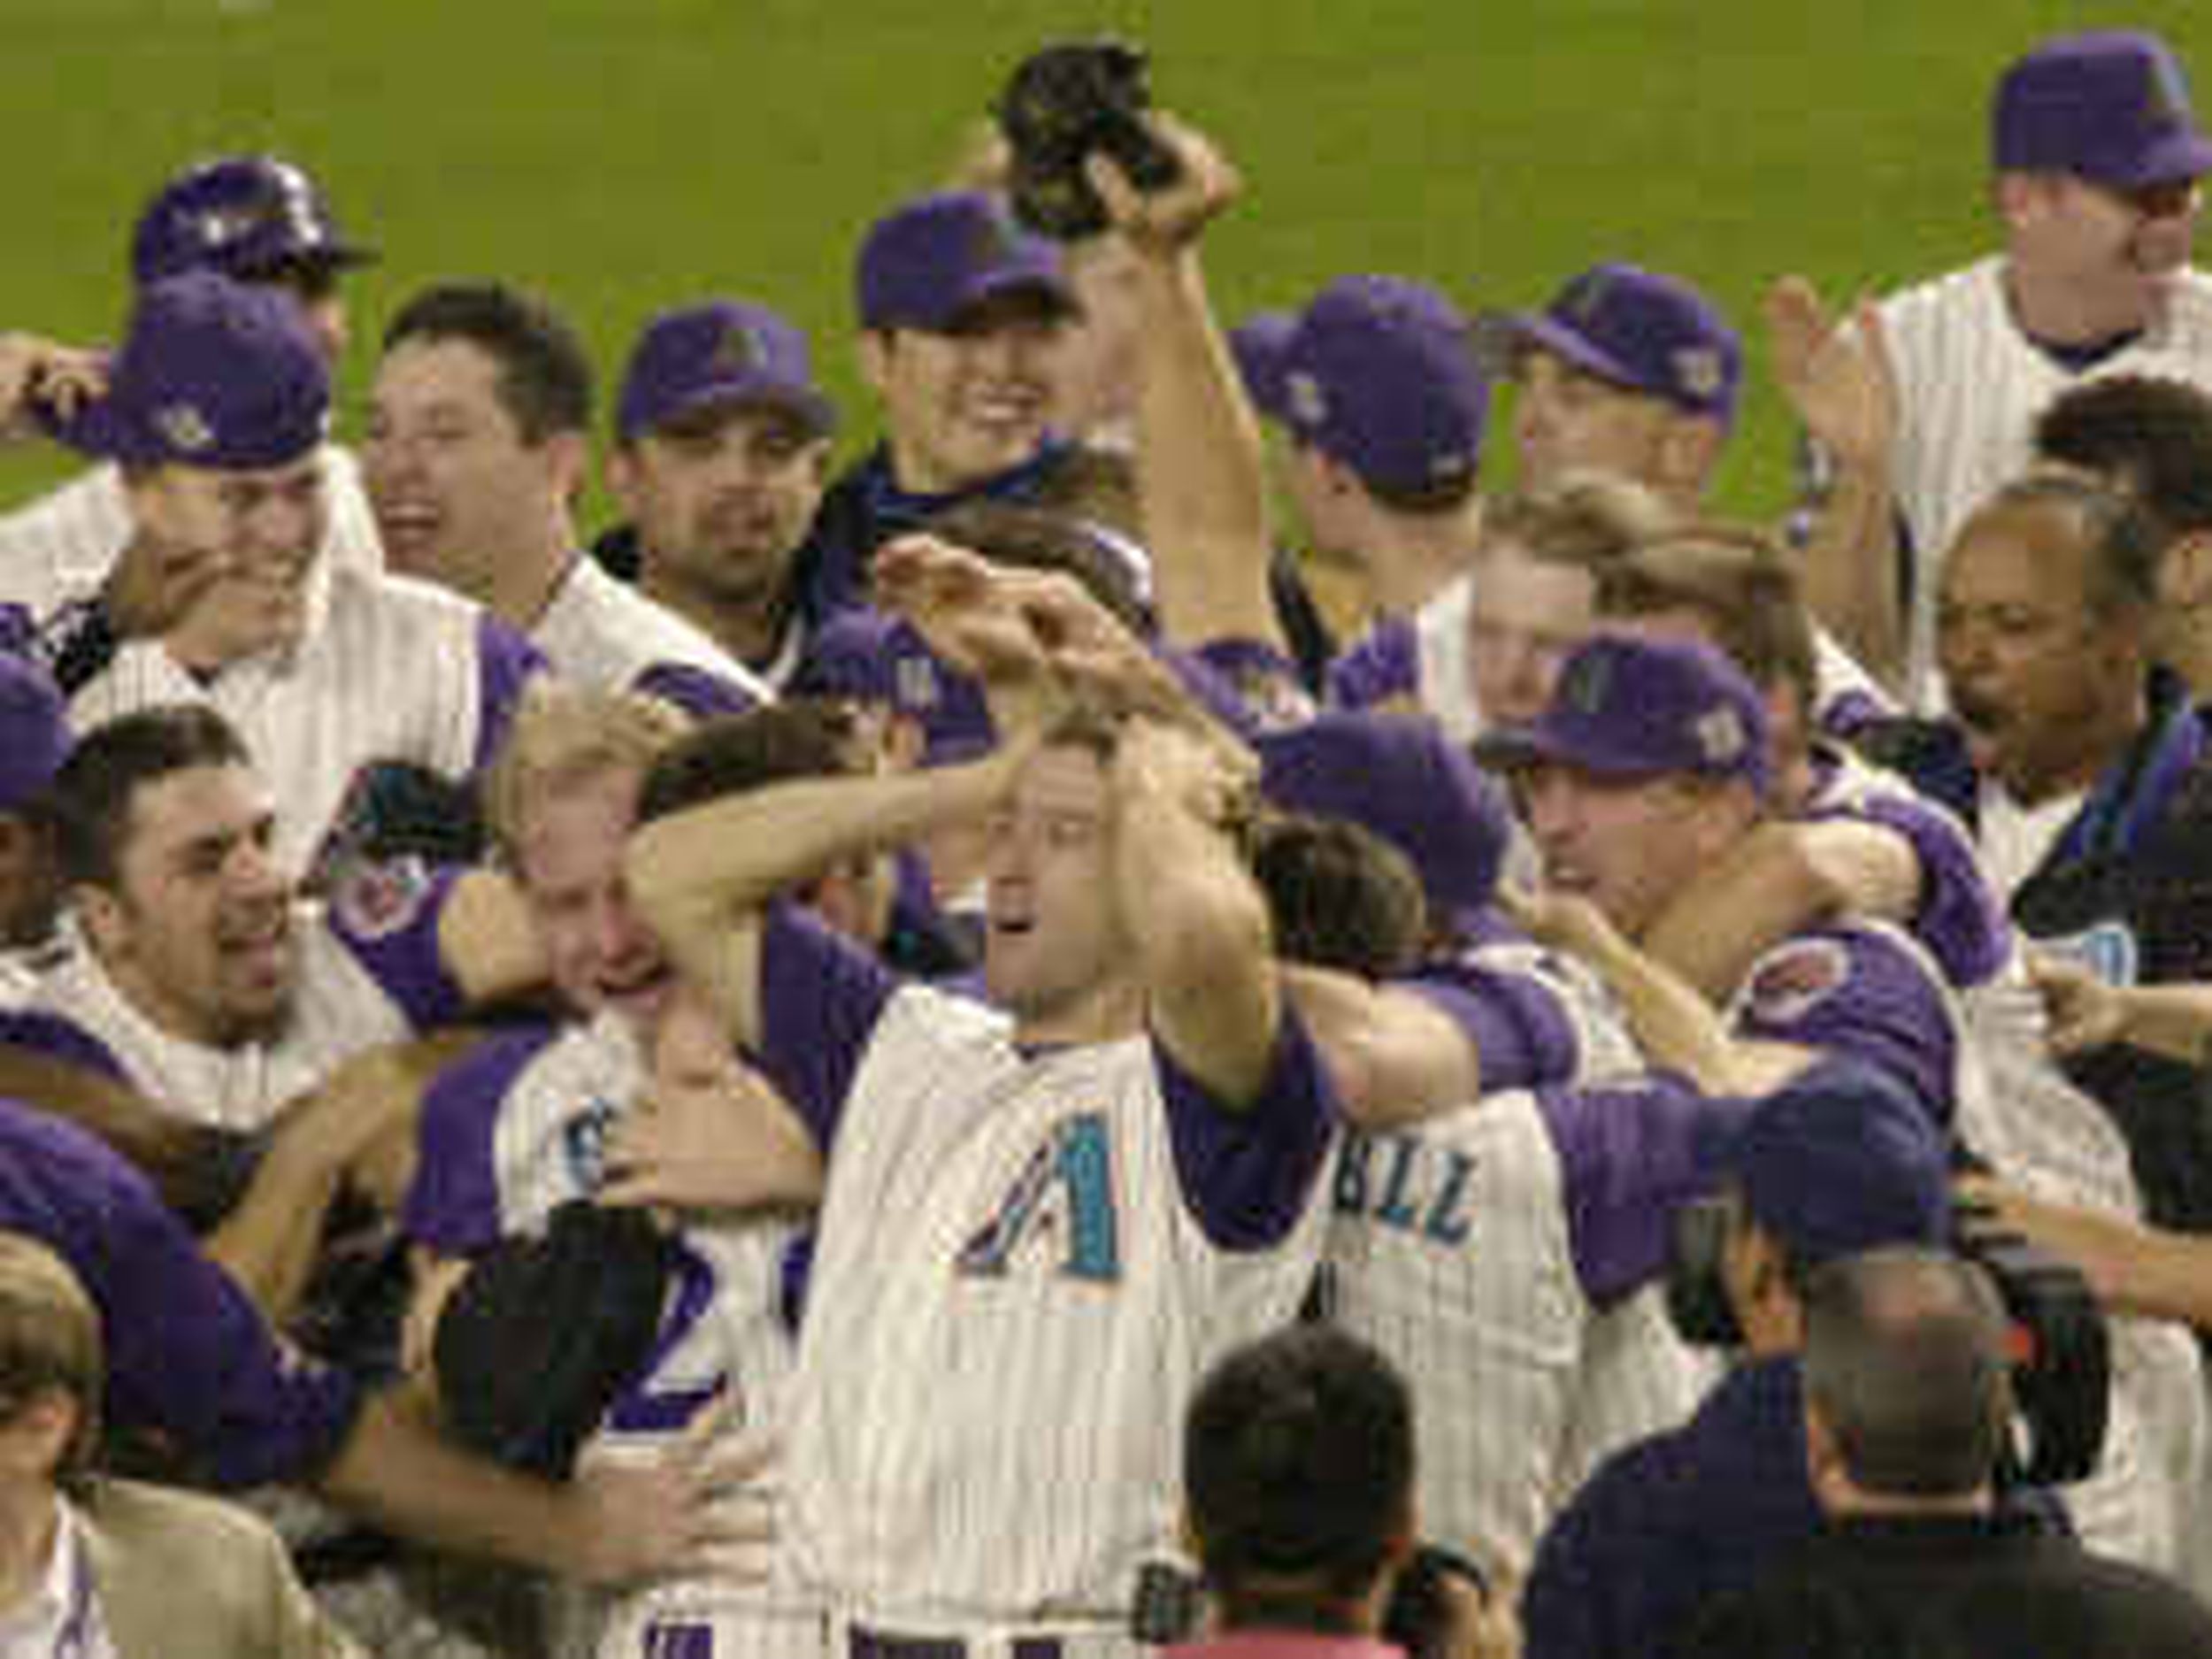 As D-backs host Yankees, memories surface of 2001 World Series